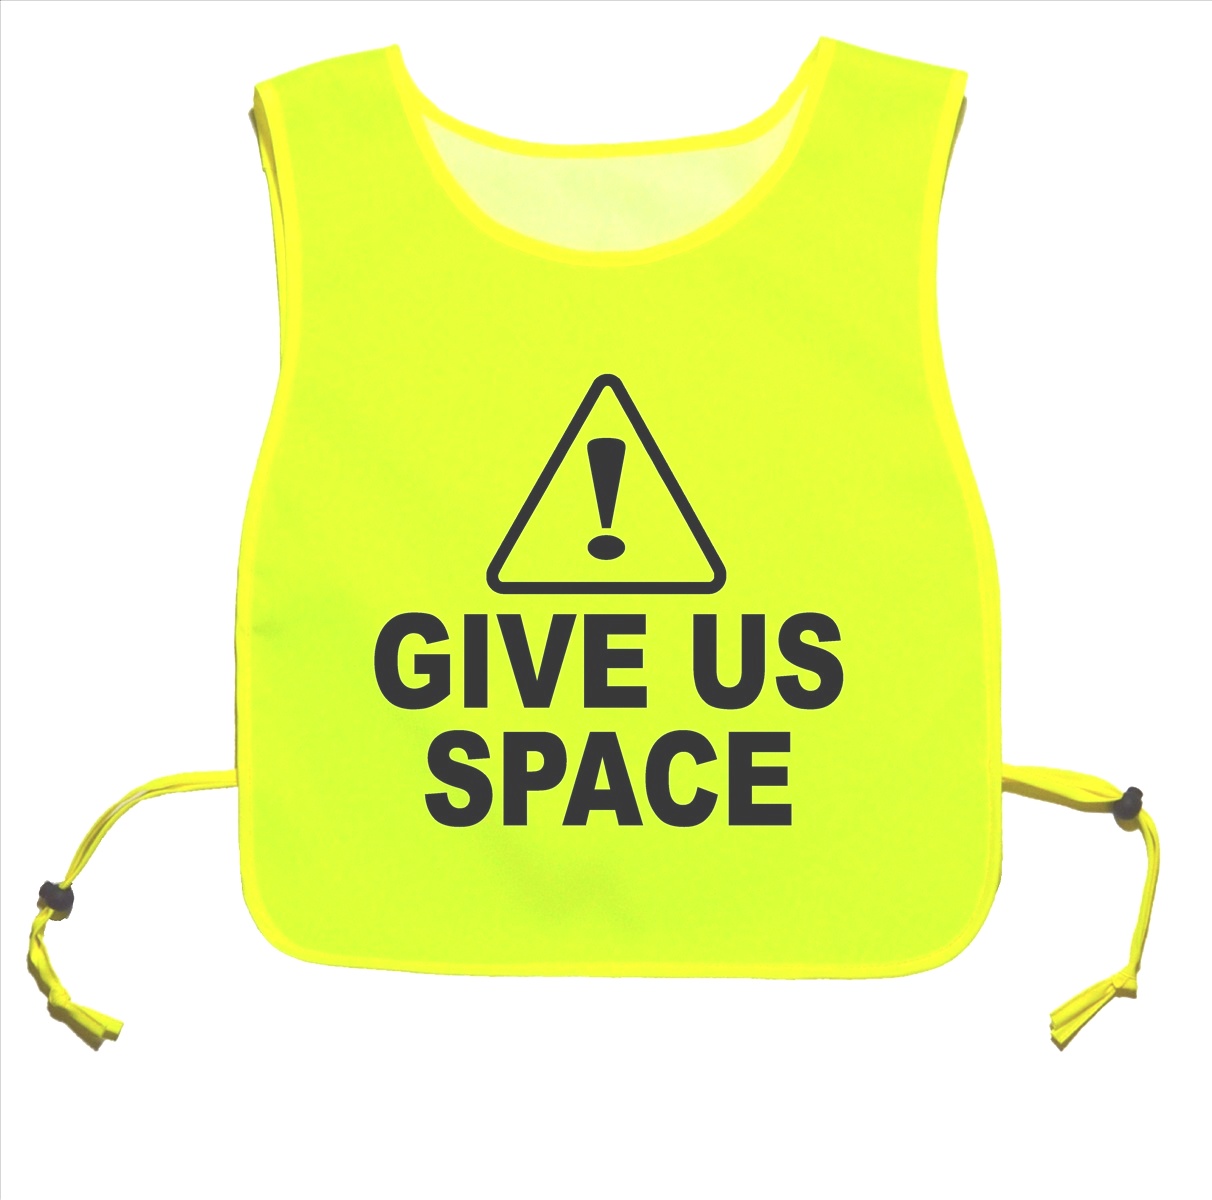 Give Us Space Reactive Dog Yellow tabard Dog Walking Training 01